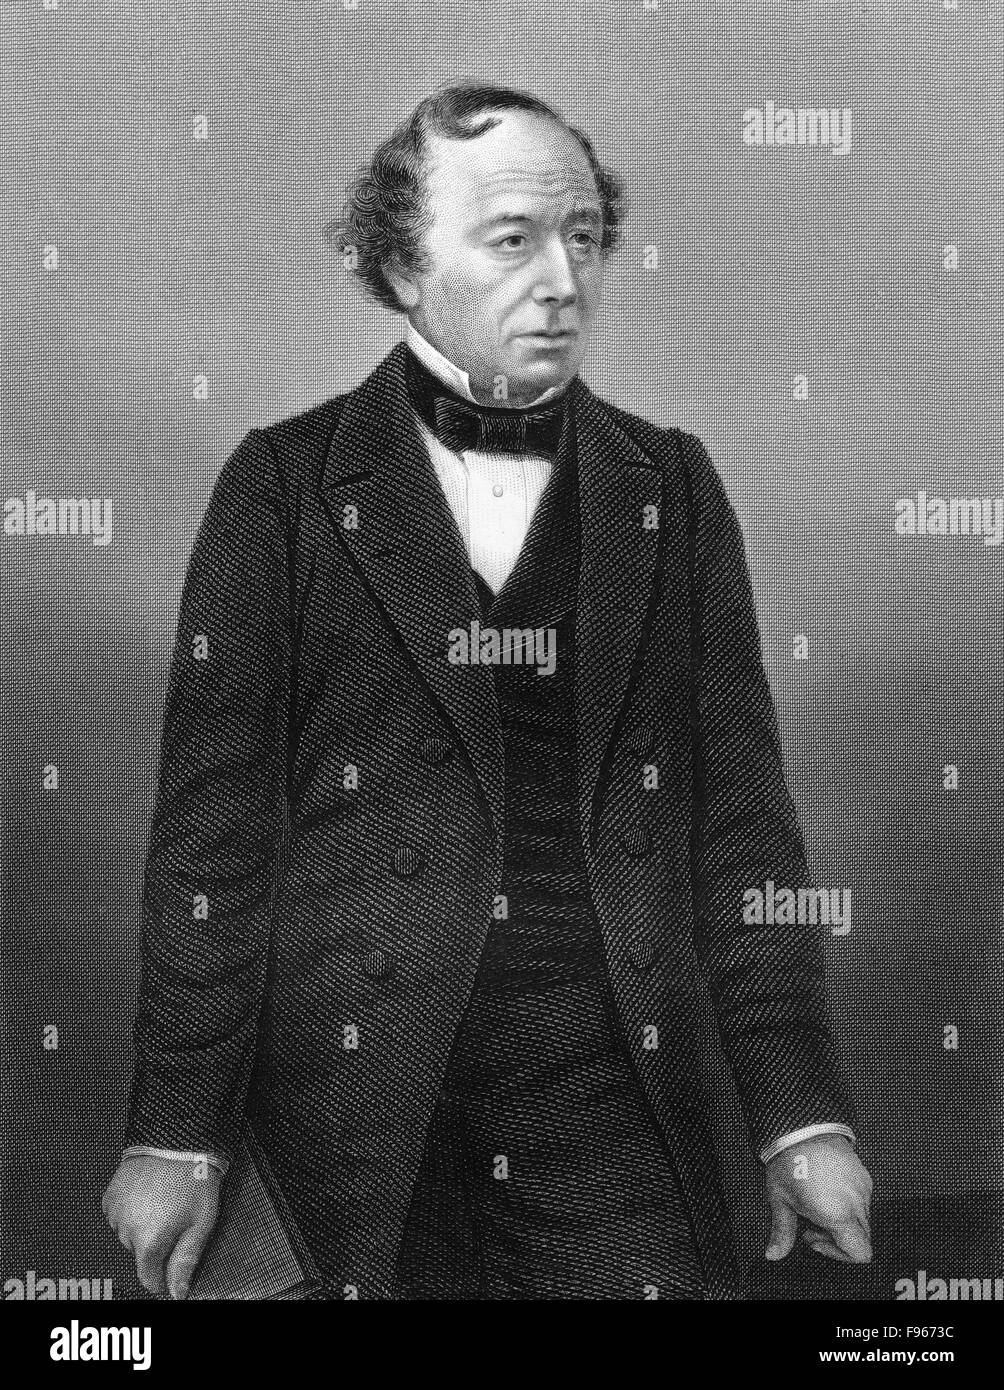 Benjamin Disraeli, 1st Earl of Beaconsfield, 1804 - 1881, a British statesman and novelist, Stock Photo